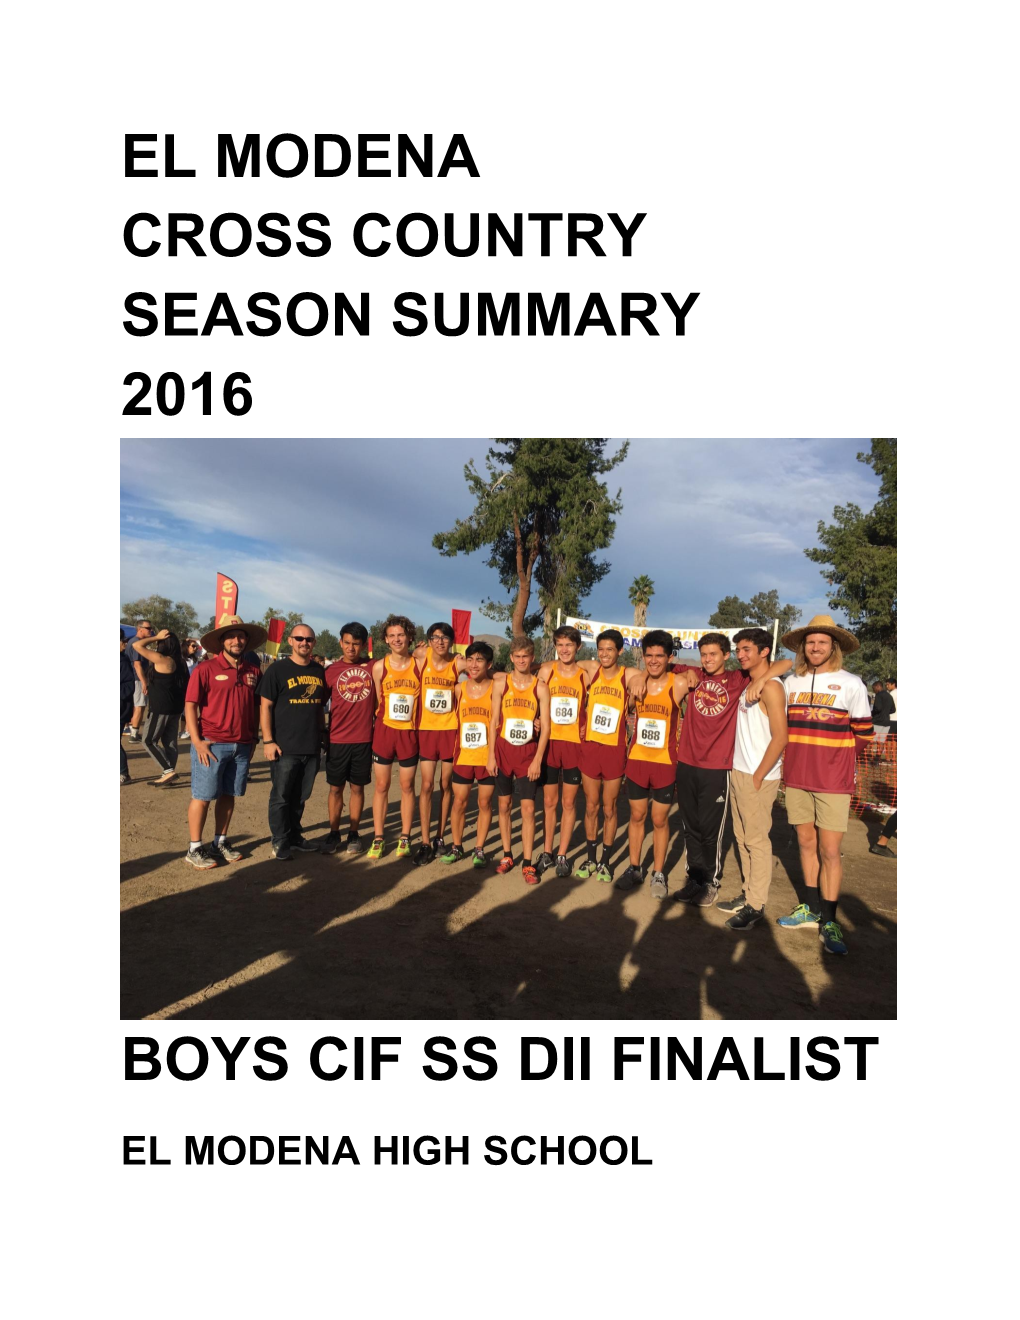 Boys Cif Ss Dii Finalist